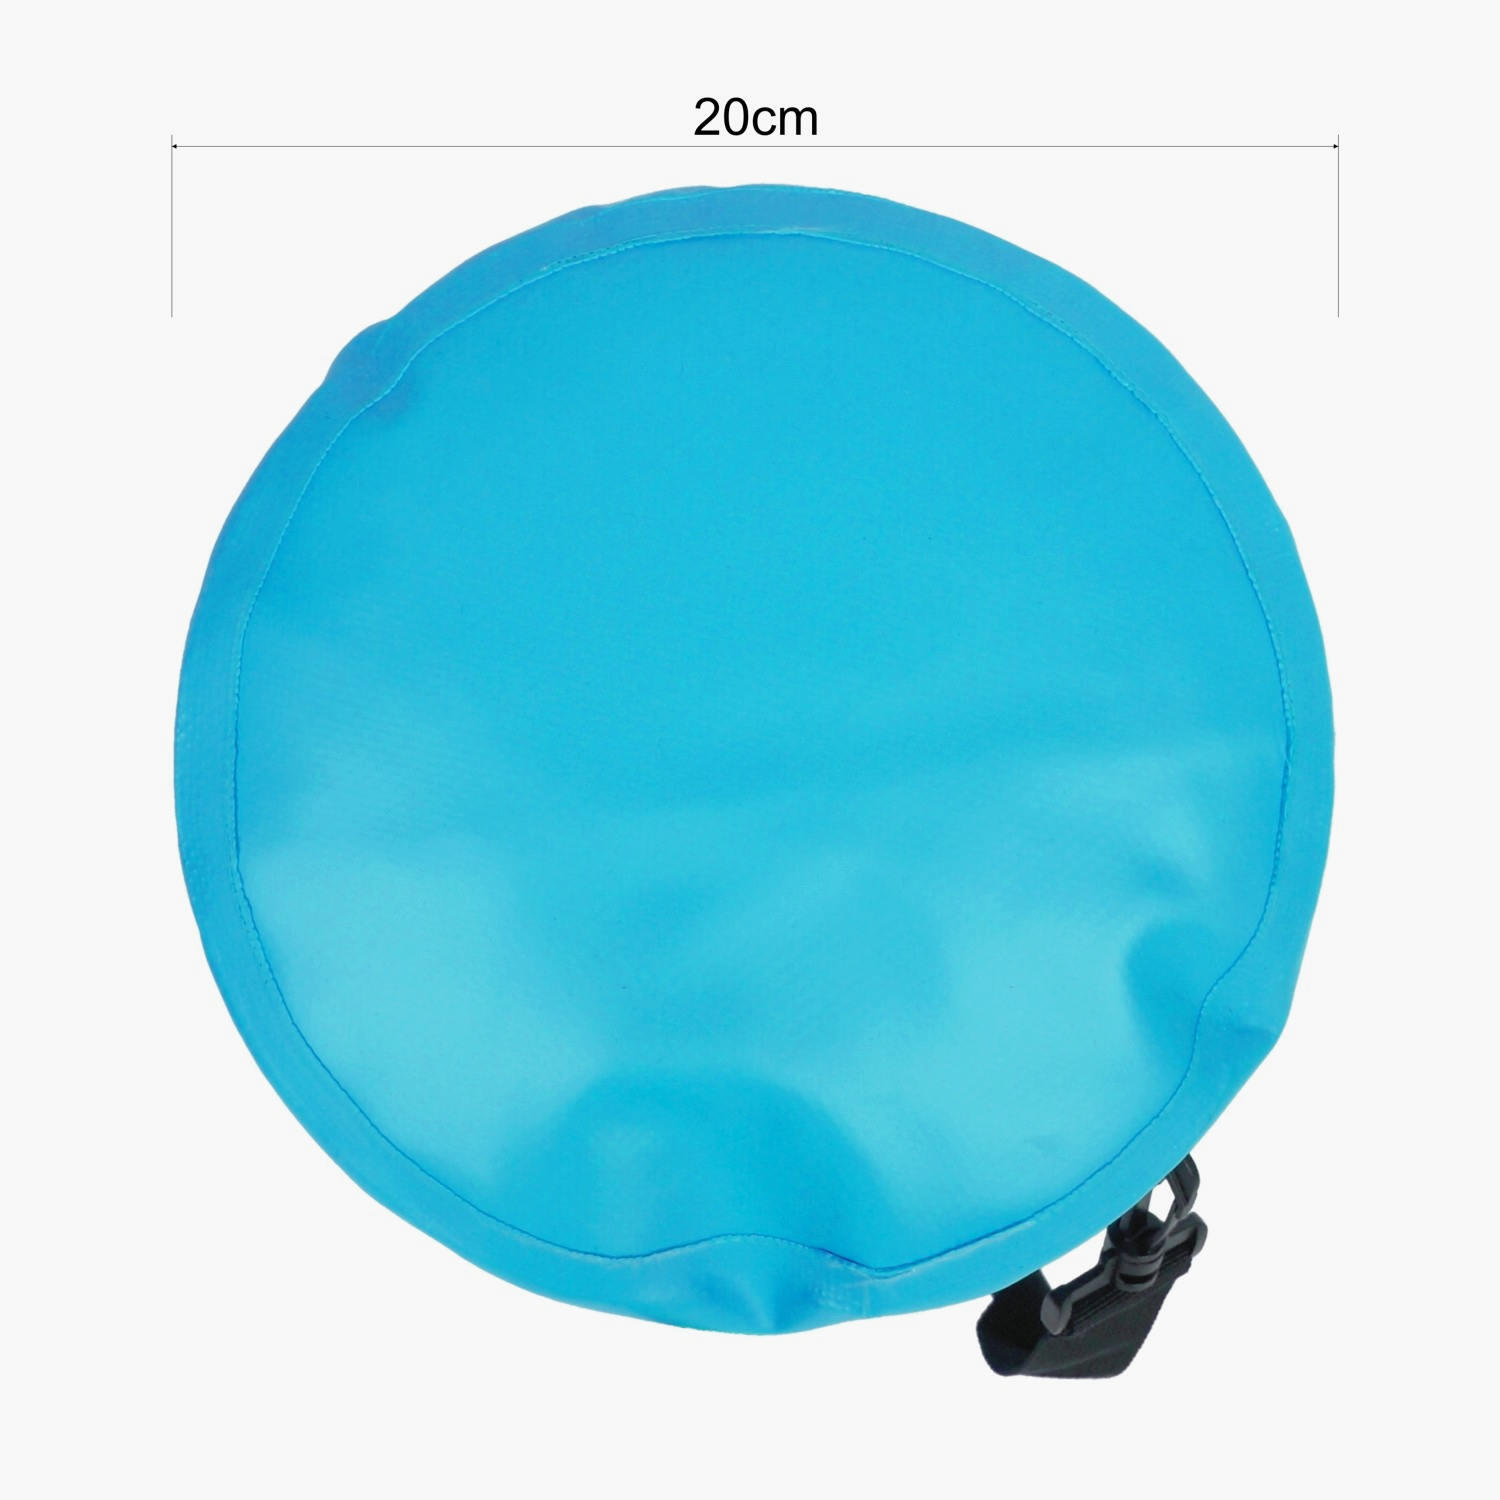 Lomo 10L Drybags - Blue with shoulder strap 5/5